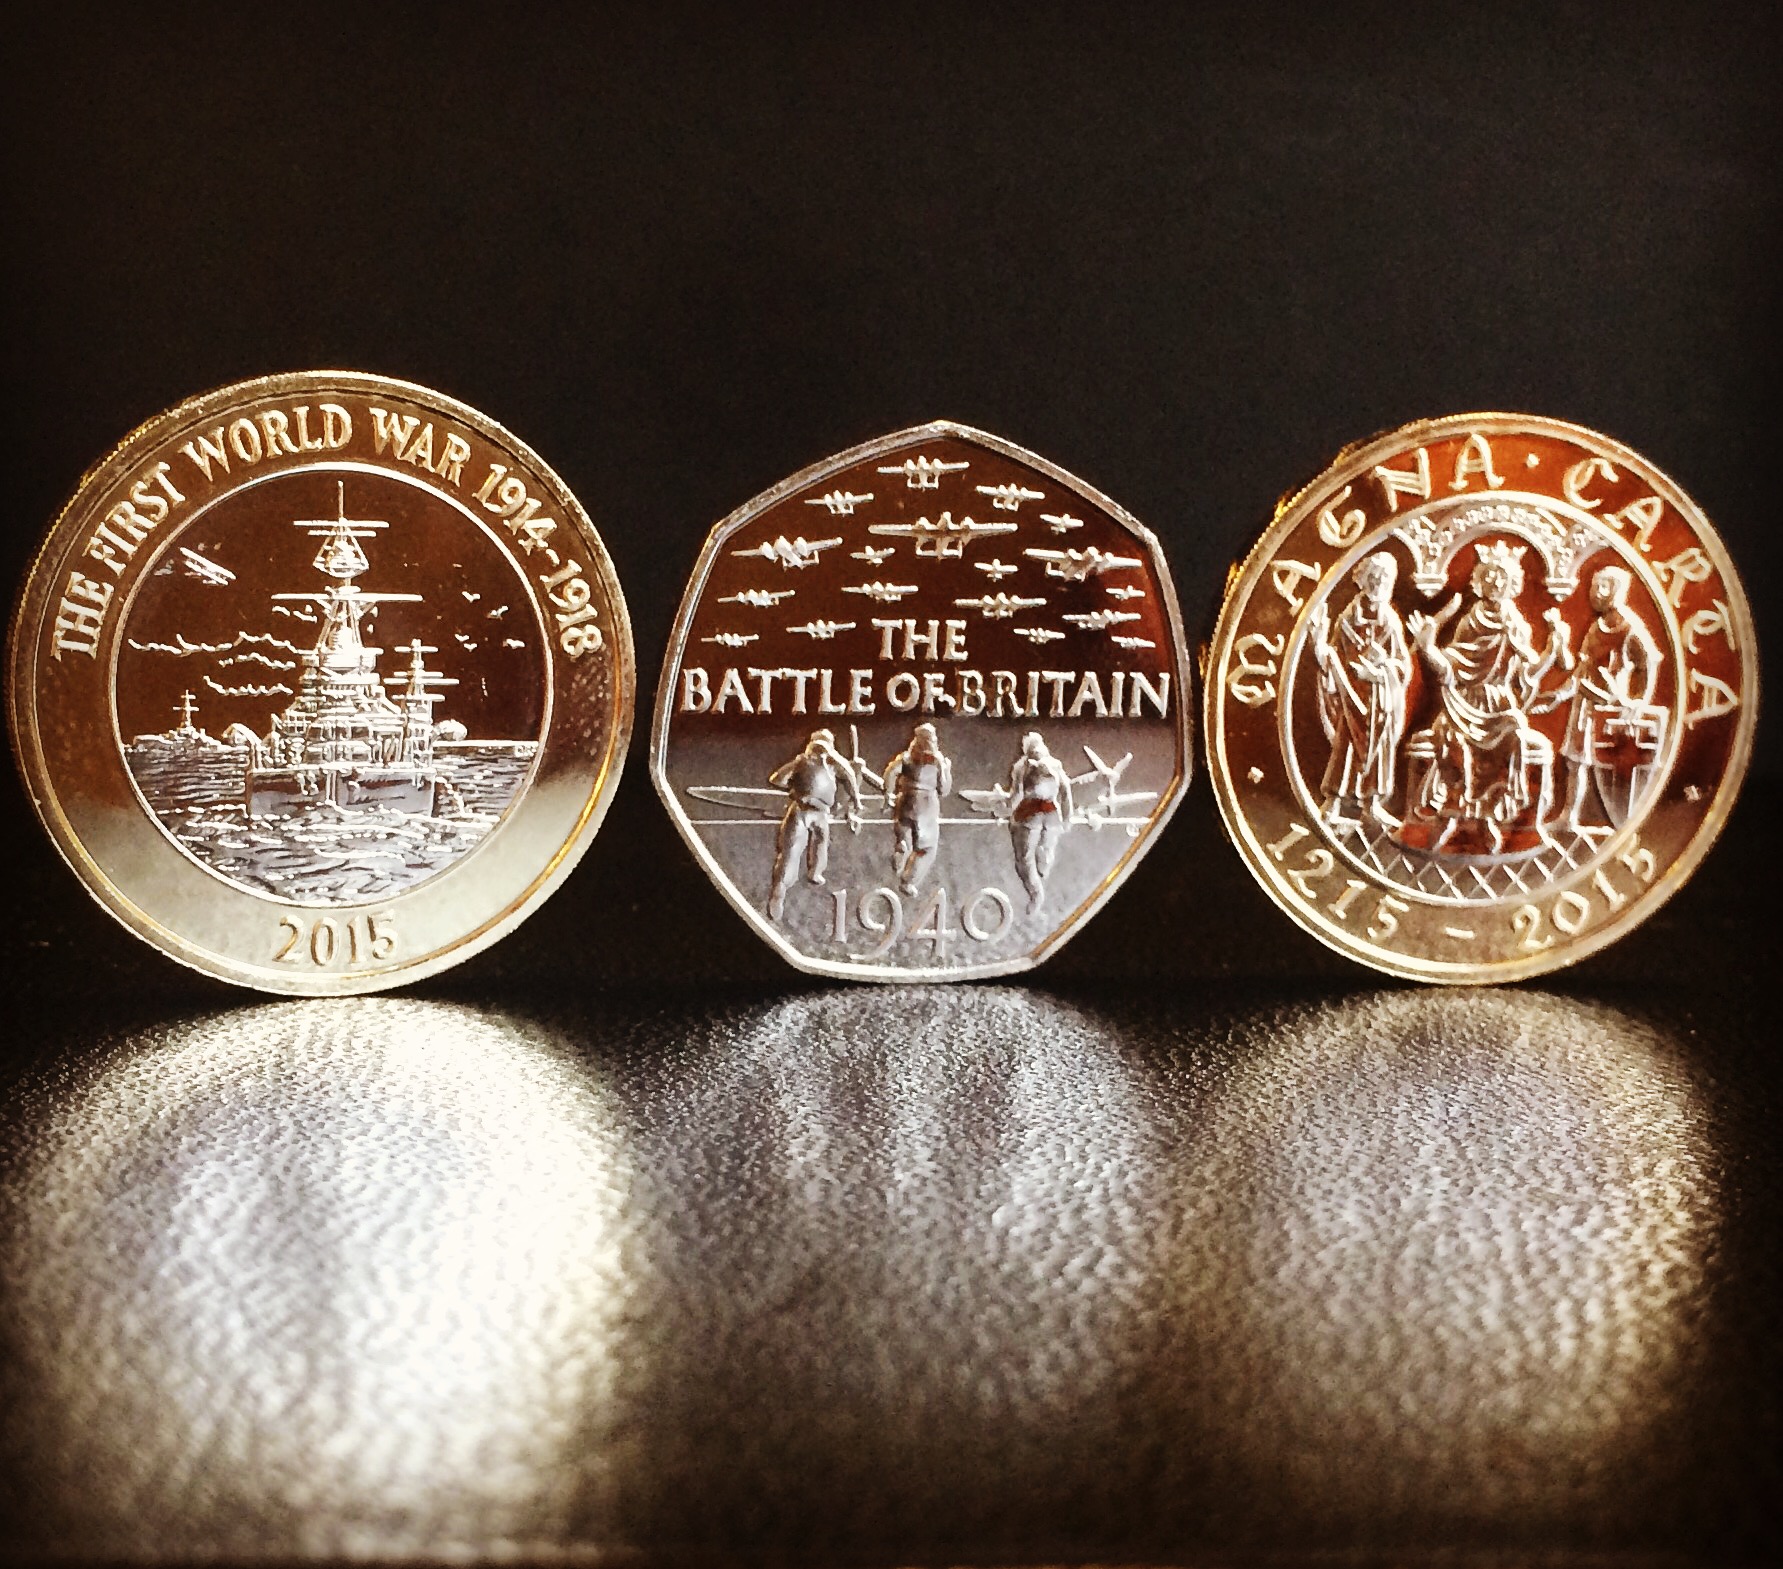 Where are the 2015 commemorative coins?